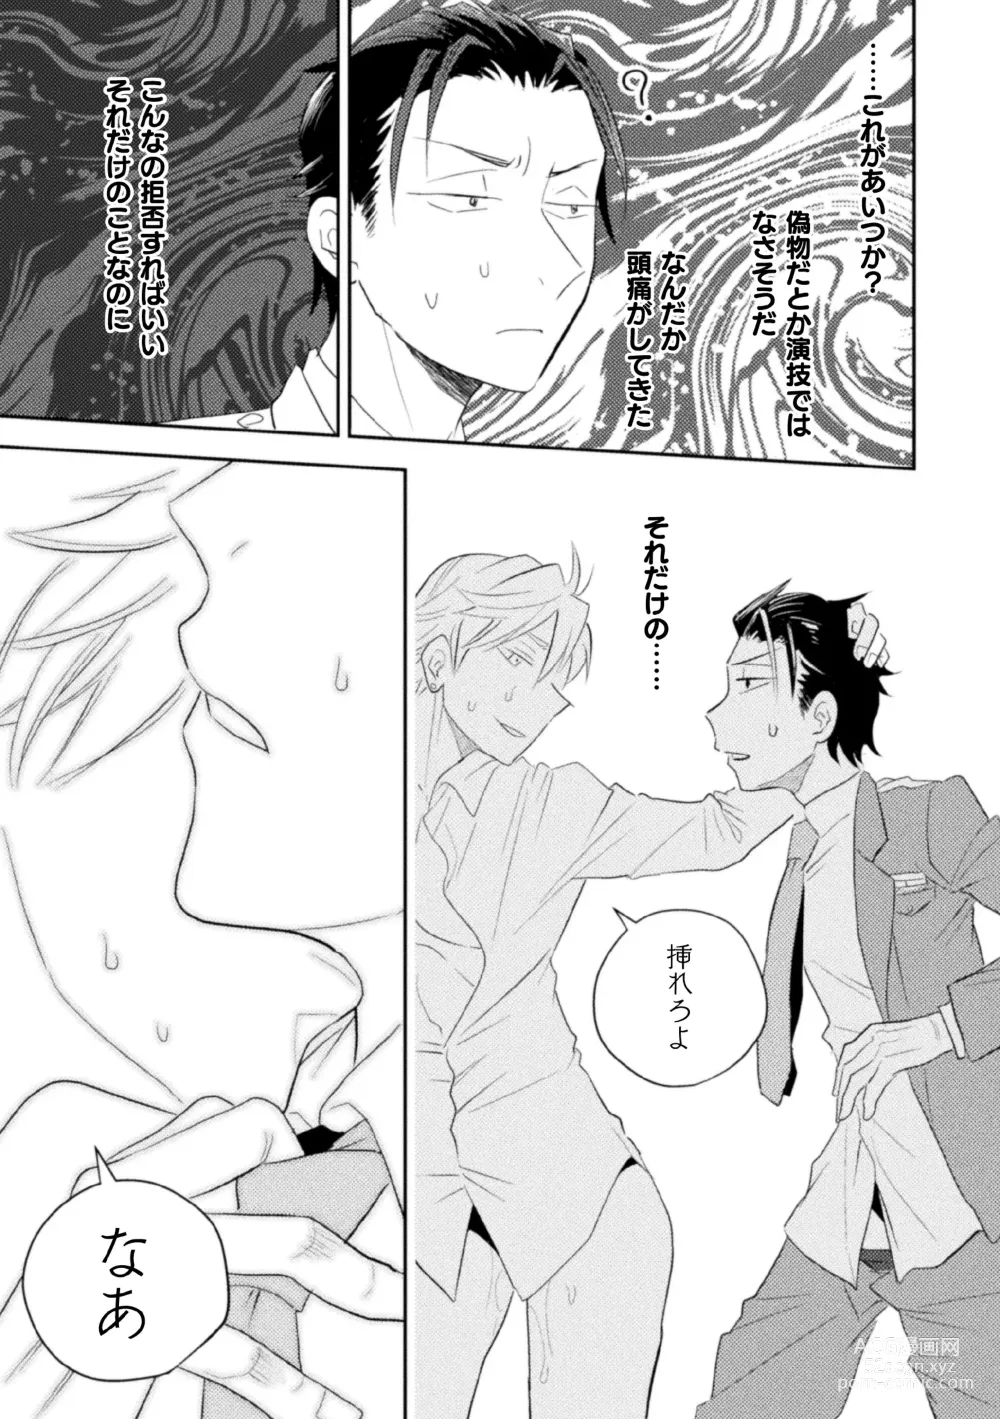 Page 33 of manga Zekkai Rougoku 4 Zekkai no Ori to Inma no Wana